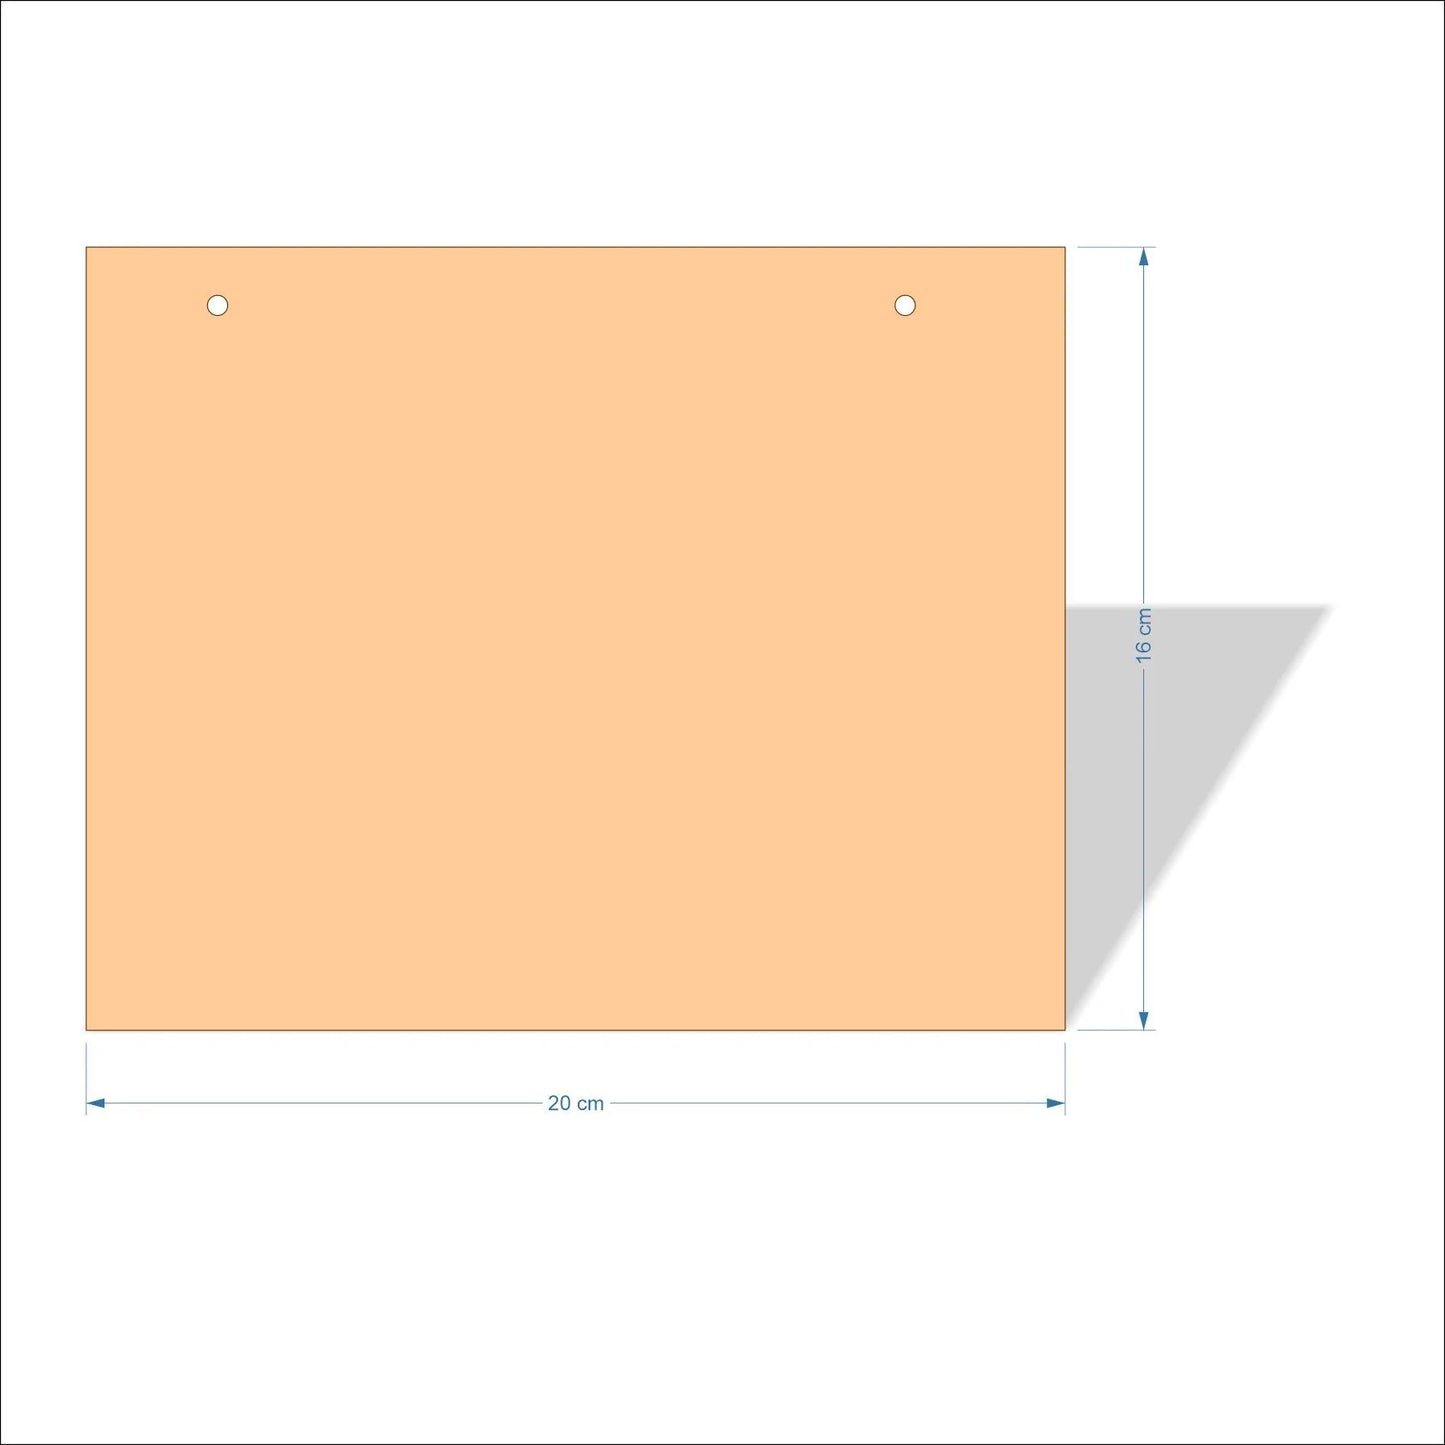 20 cm X 16 cm 4mm poplar plywood Plaques with square corners